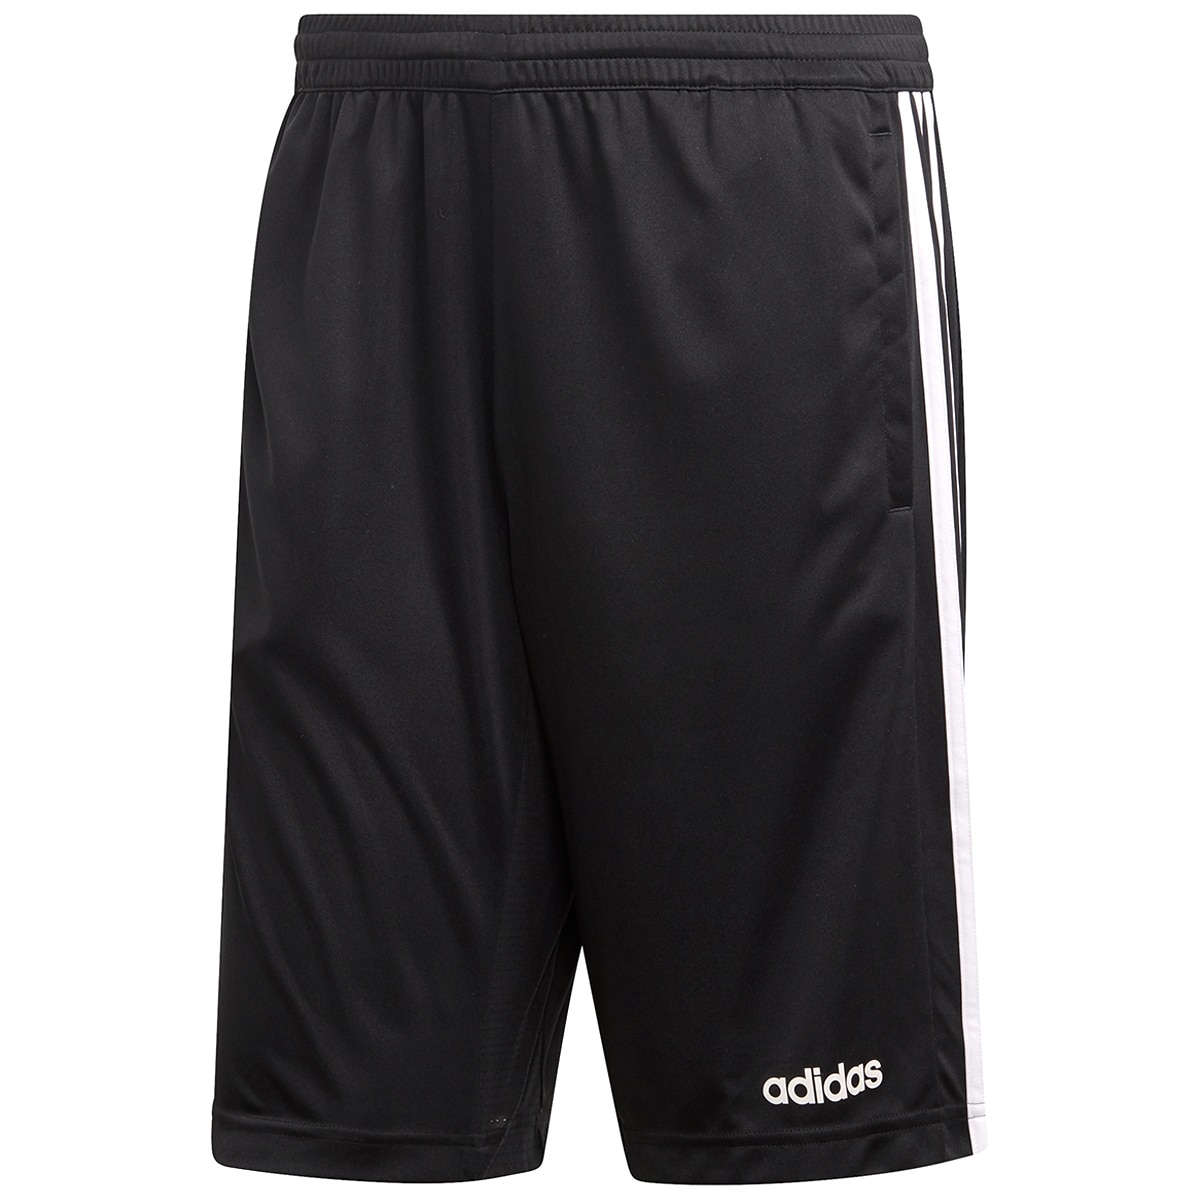 Adidas Shorts Active - Black Stripe